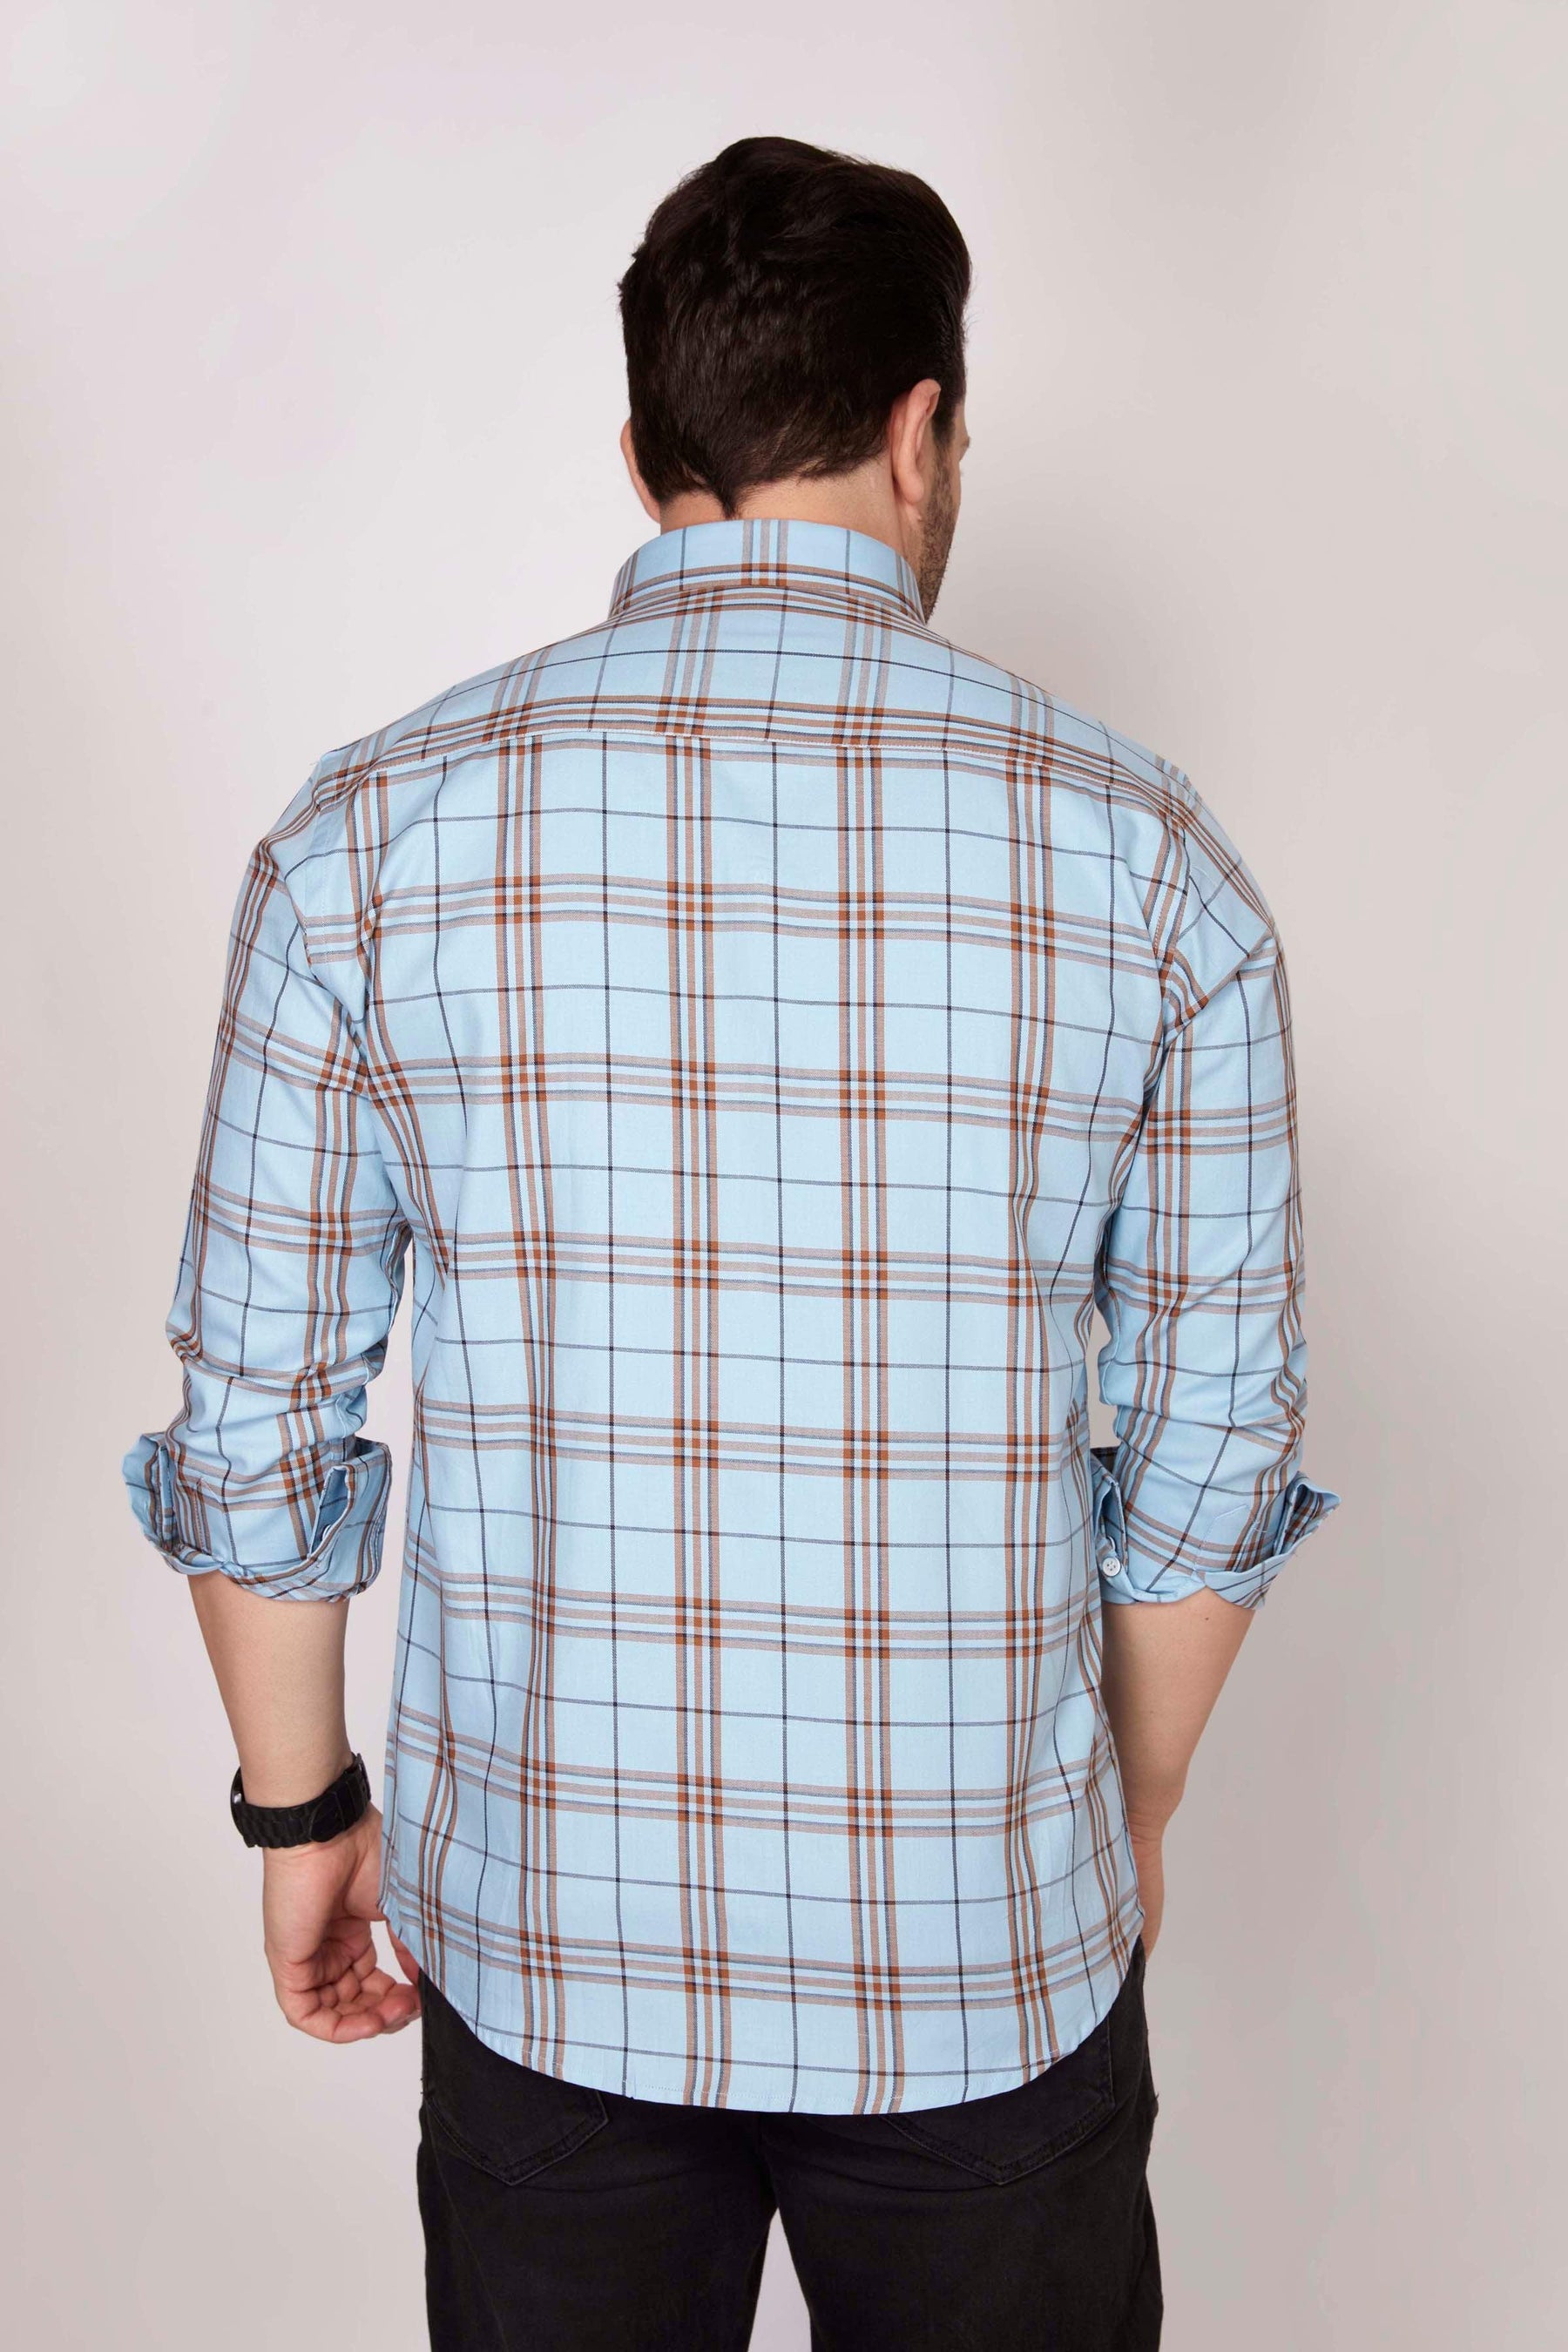 Birmingham - Checkered Slim fit shirt - John Watson